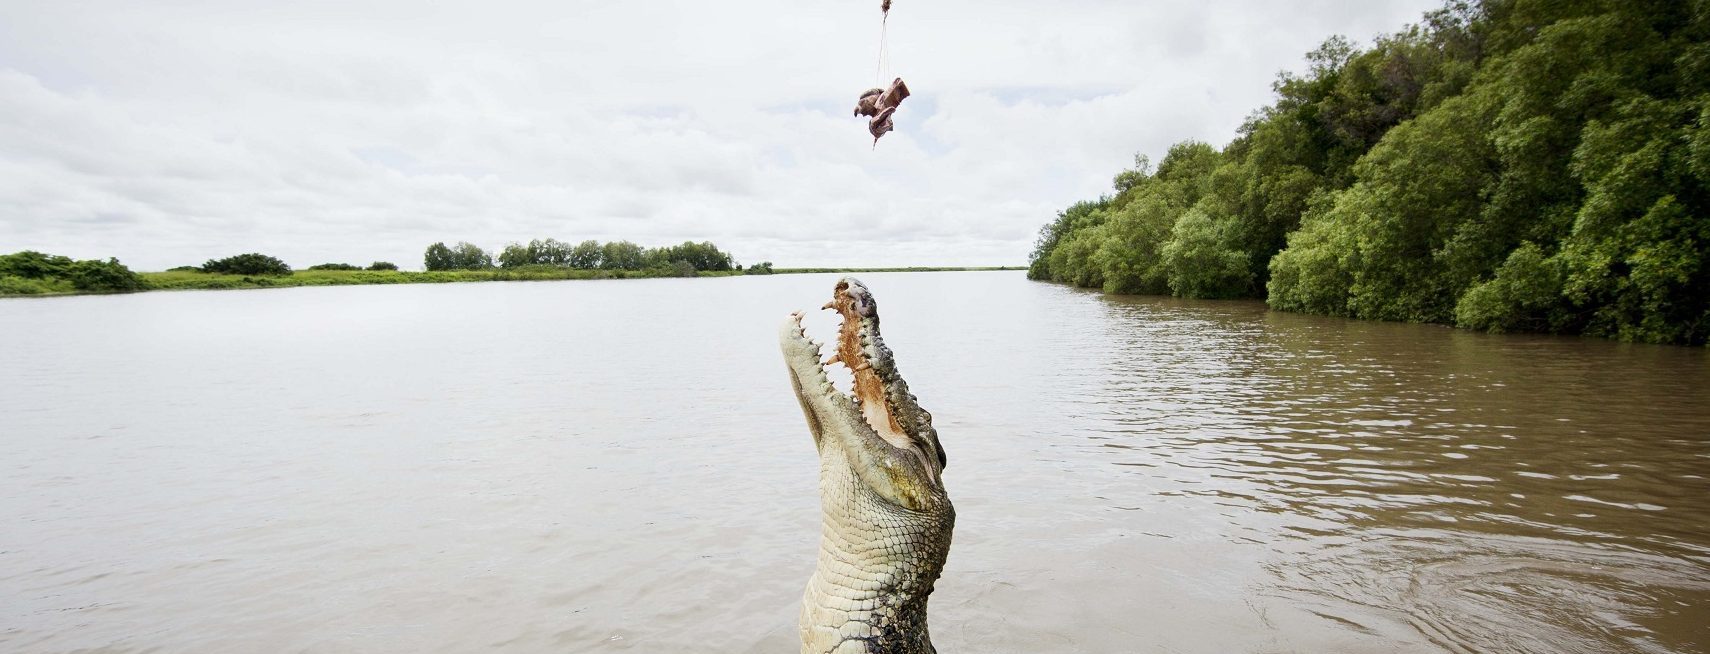 Jumping Crocodiles